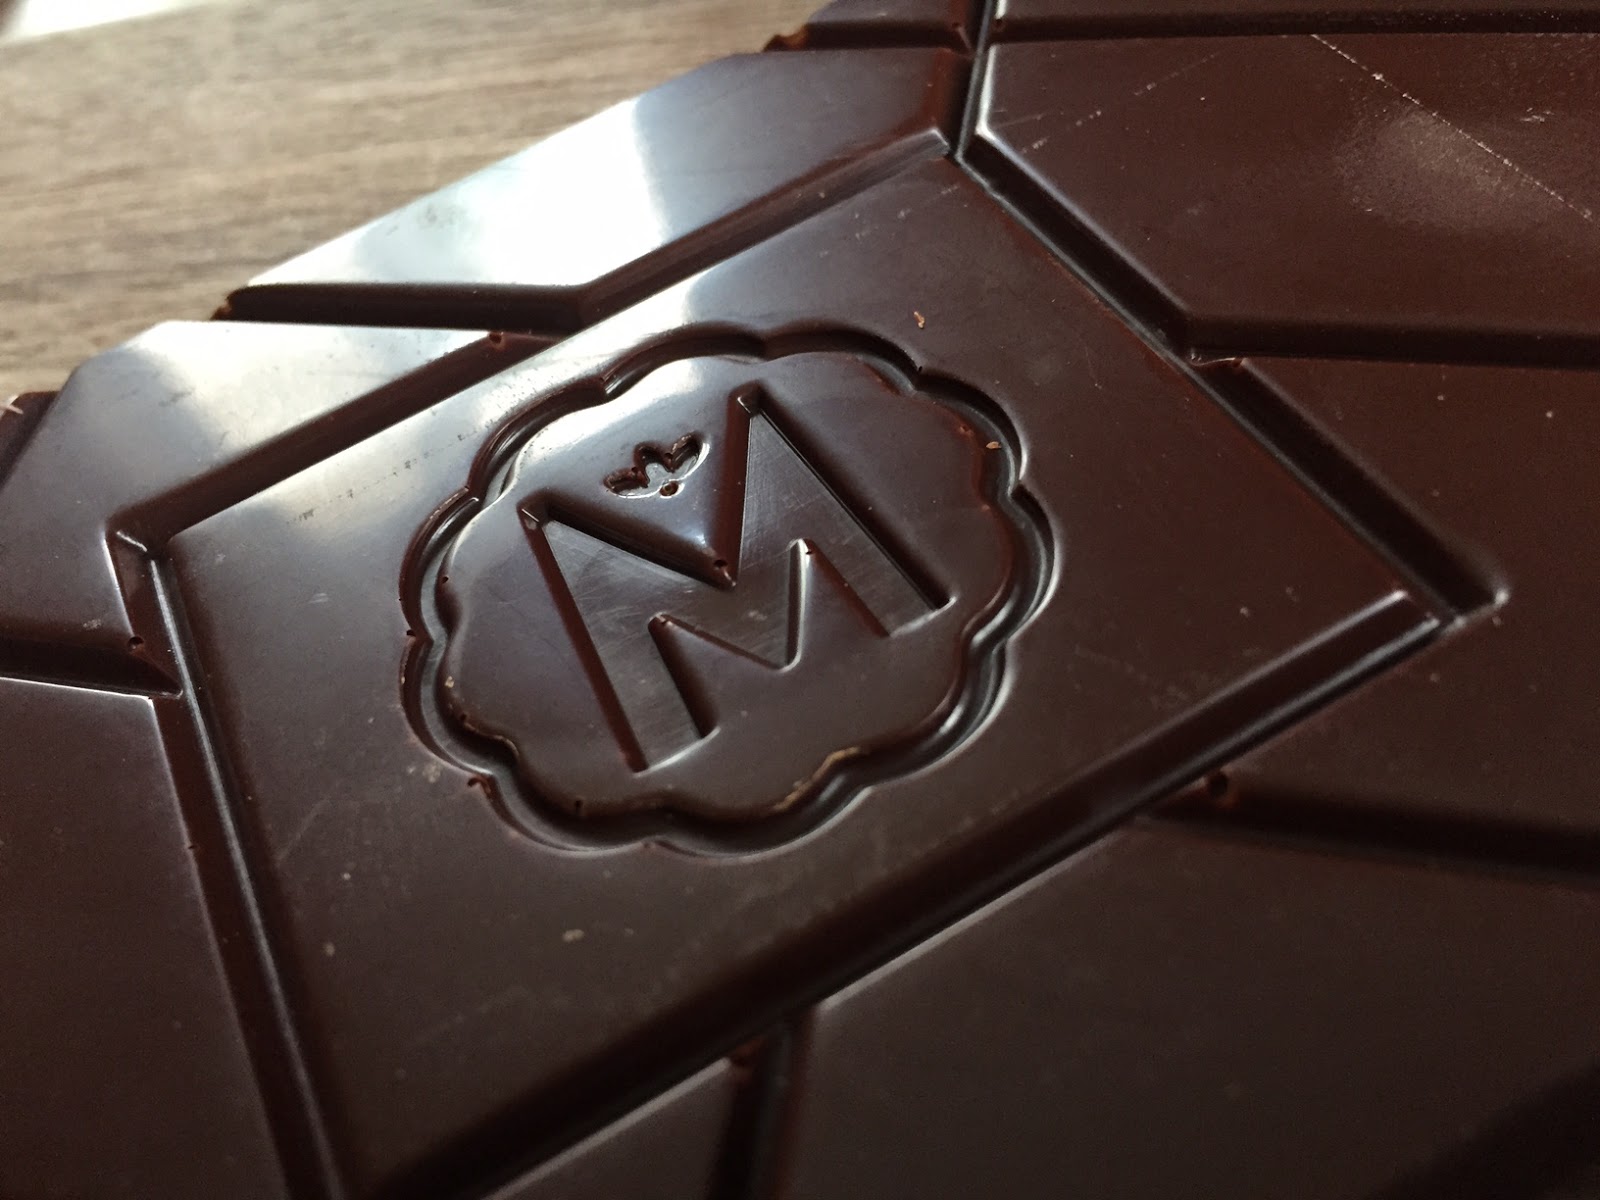 Marou Chocolat: A Flavor Journey – time cupsoul